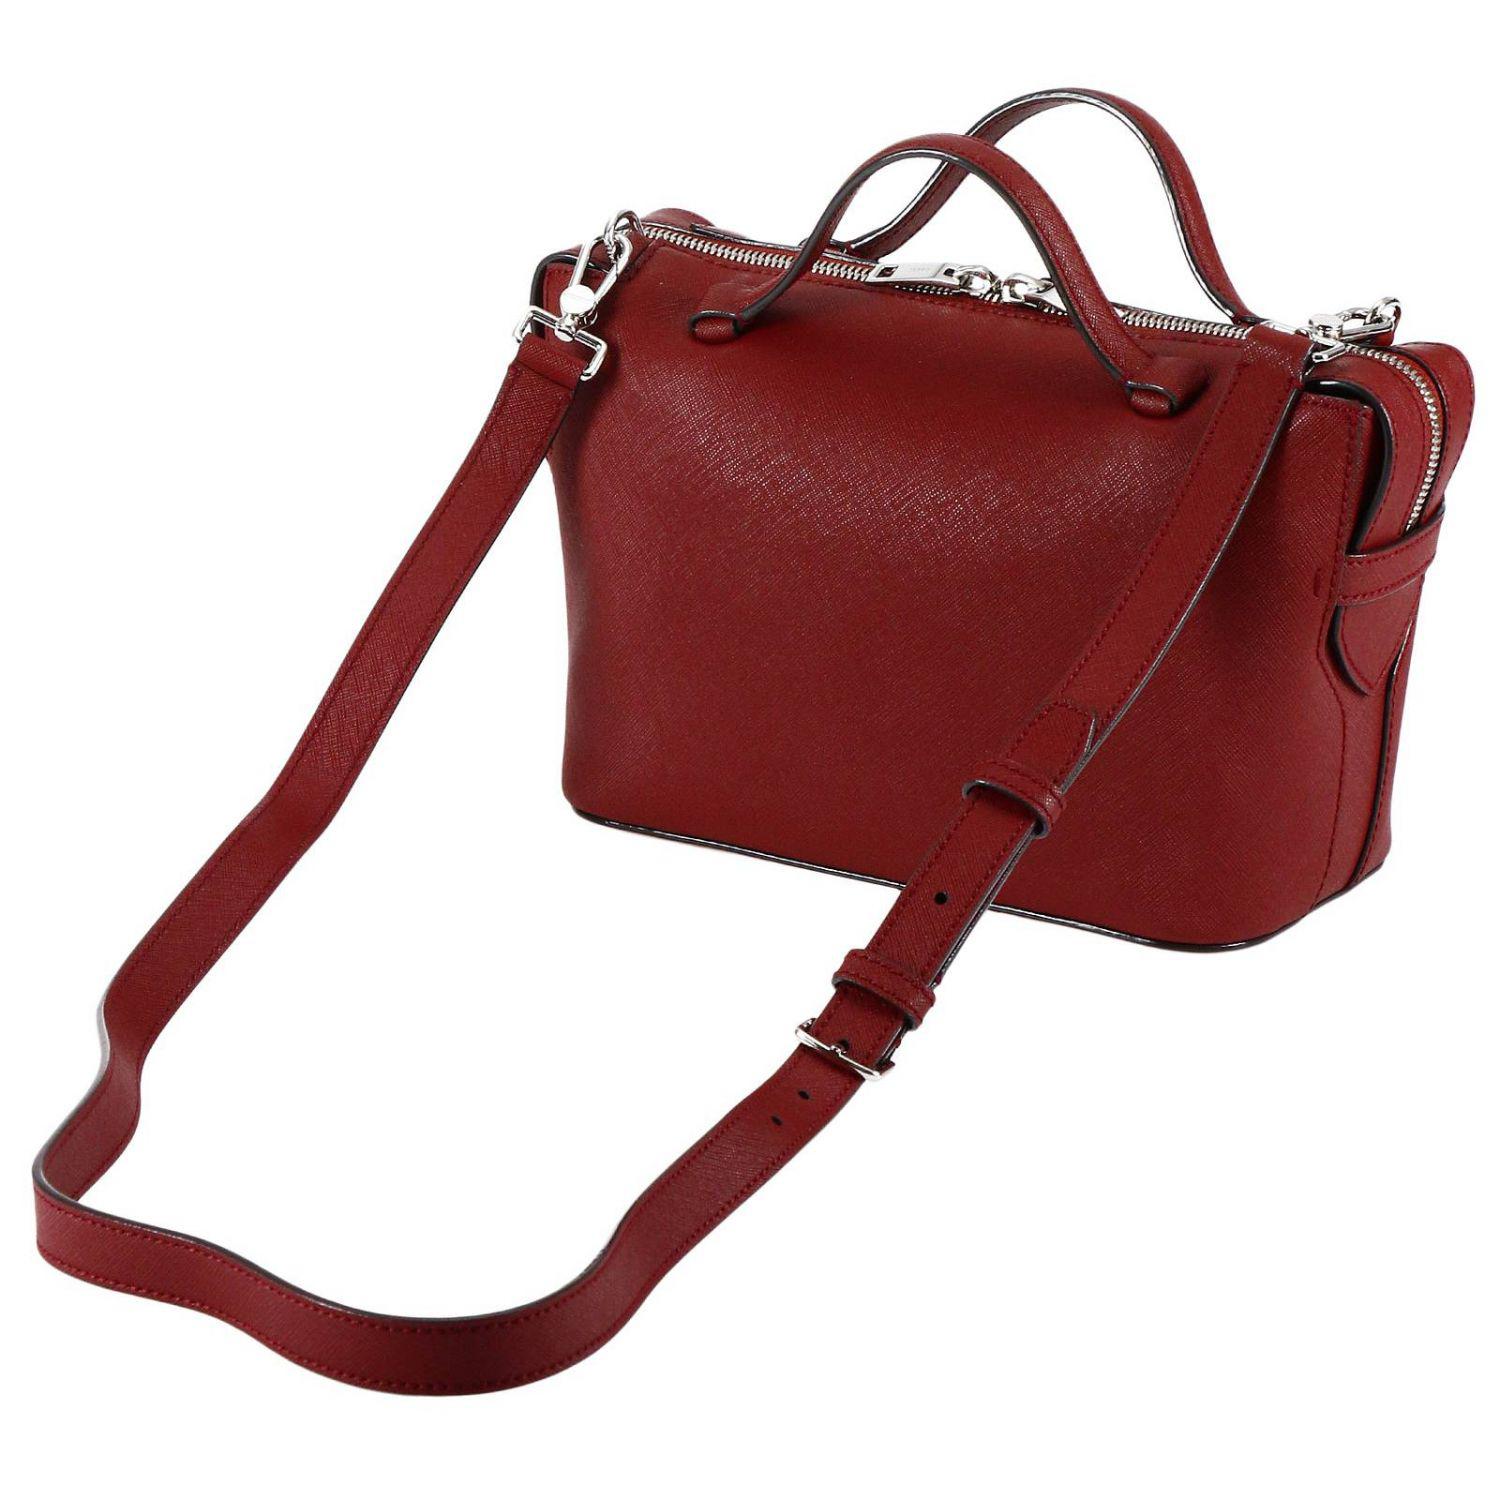 Lyst - Bally Handbag Shoulder Bag Women in Red